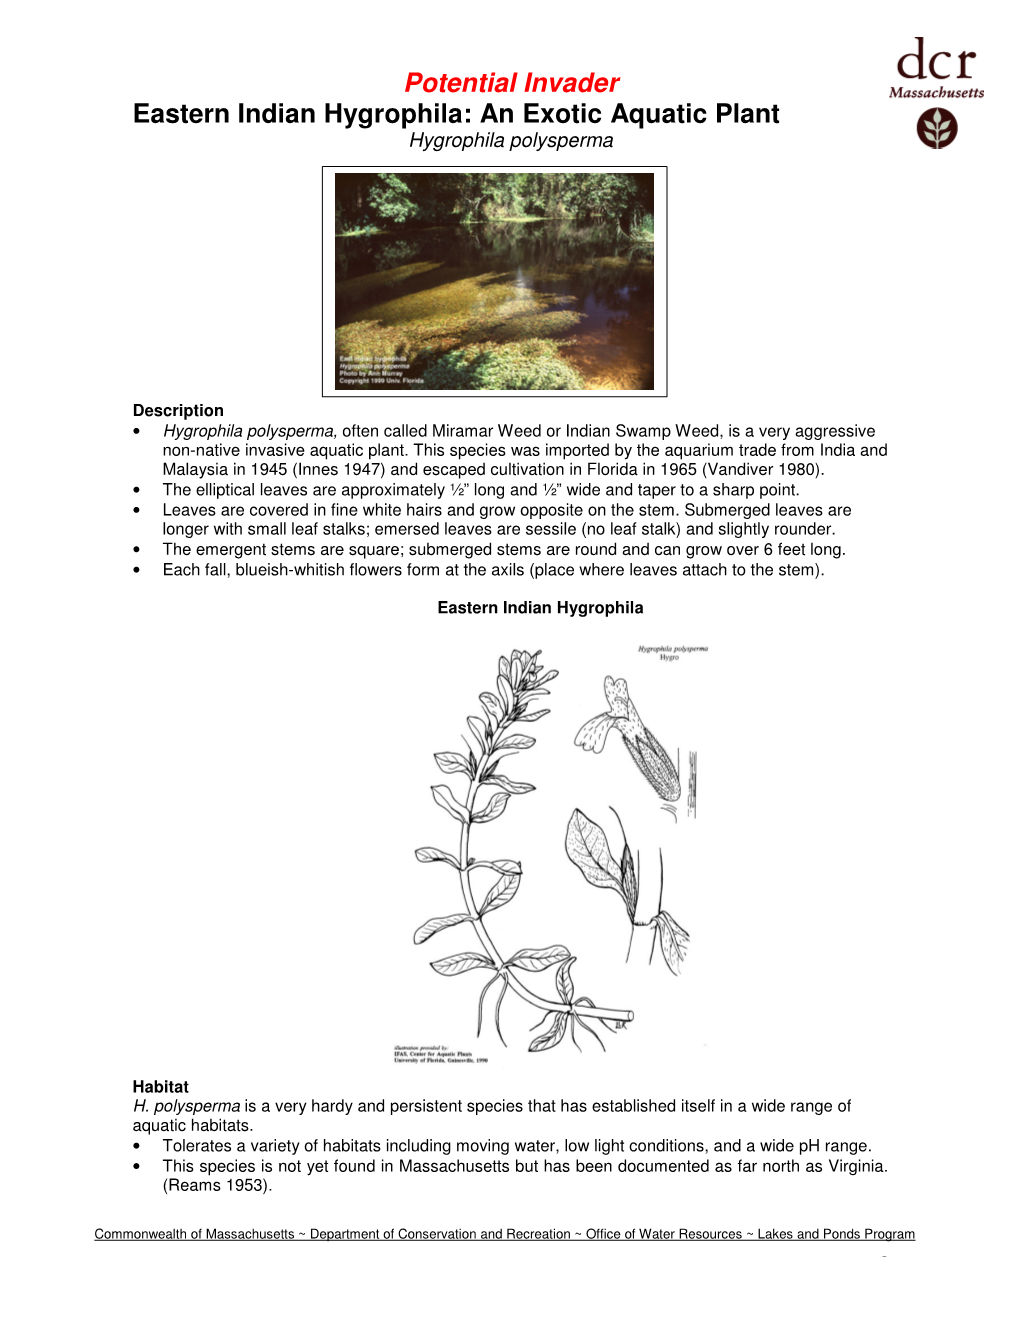 Potential Invader Eastern Indian Hygrophila: an Exotic Aquatic Plant Hygrophila Polysperma